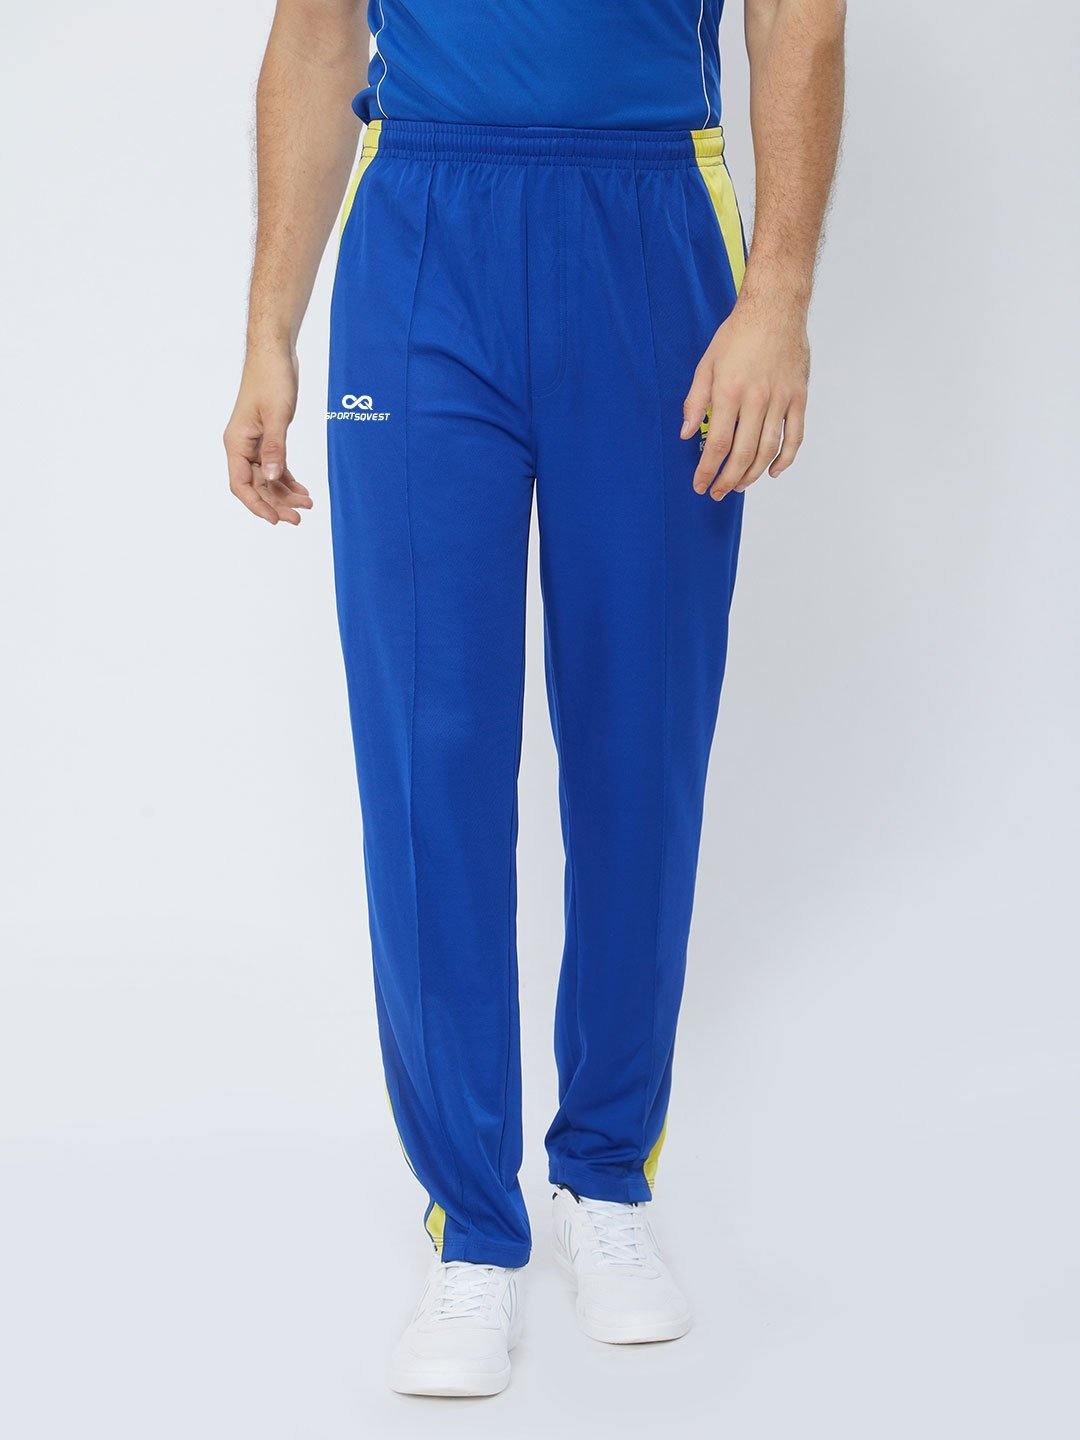 TRIUMPH Men's/Boy's Custom Design Cricket Pant White Size 26 : Amazon.in:  Clothing & Accessories